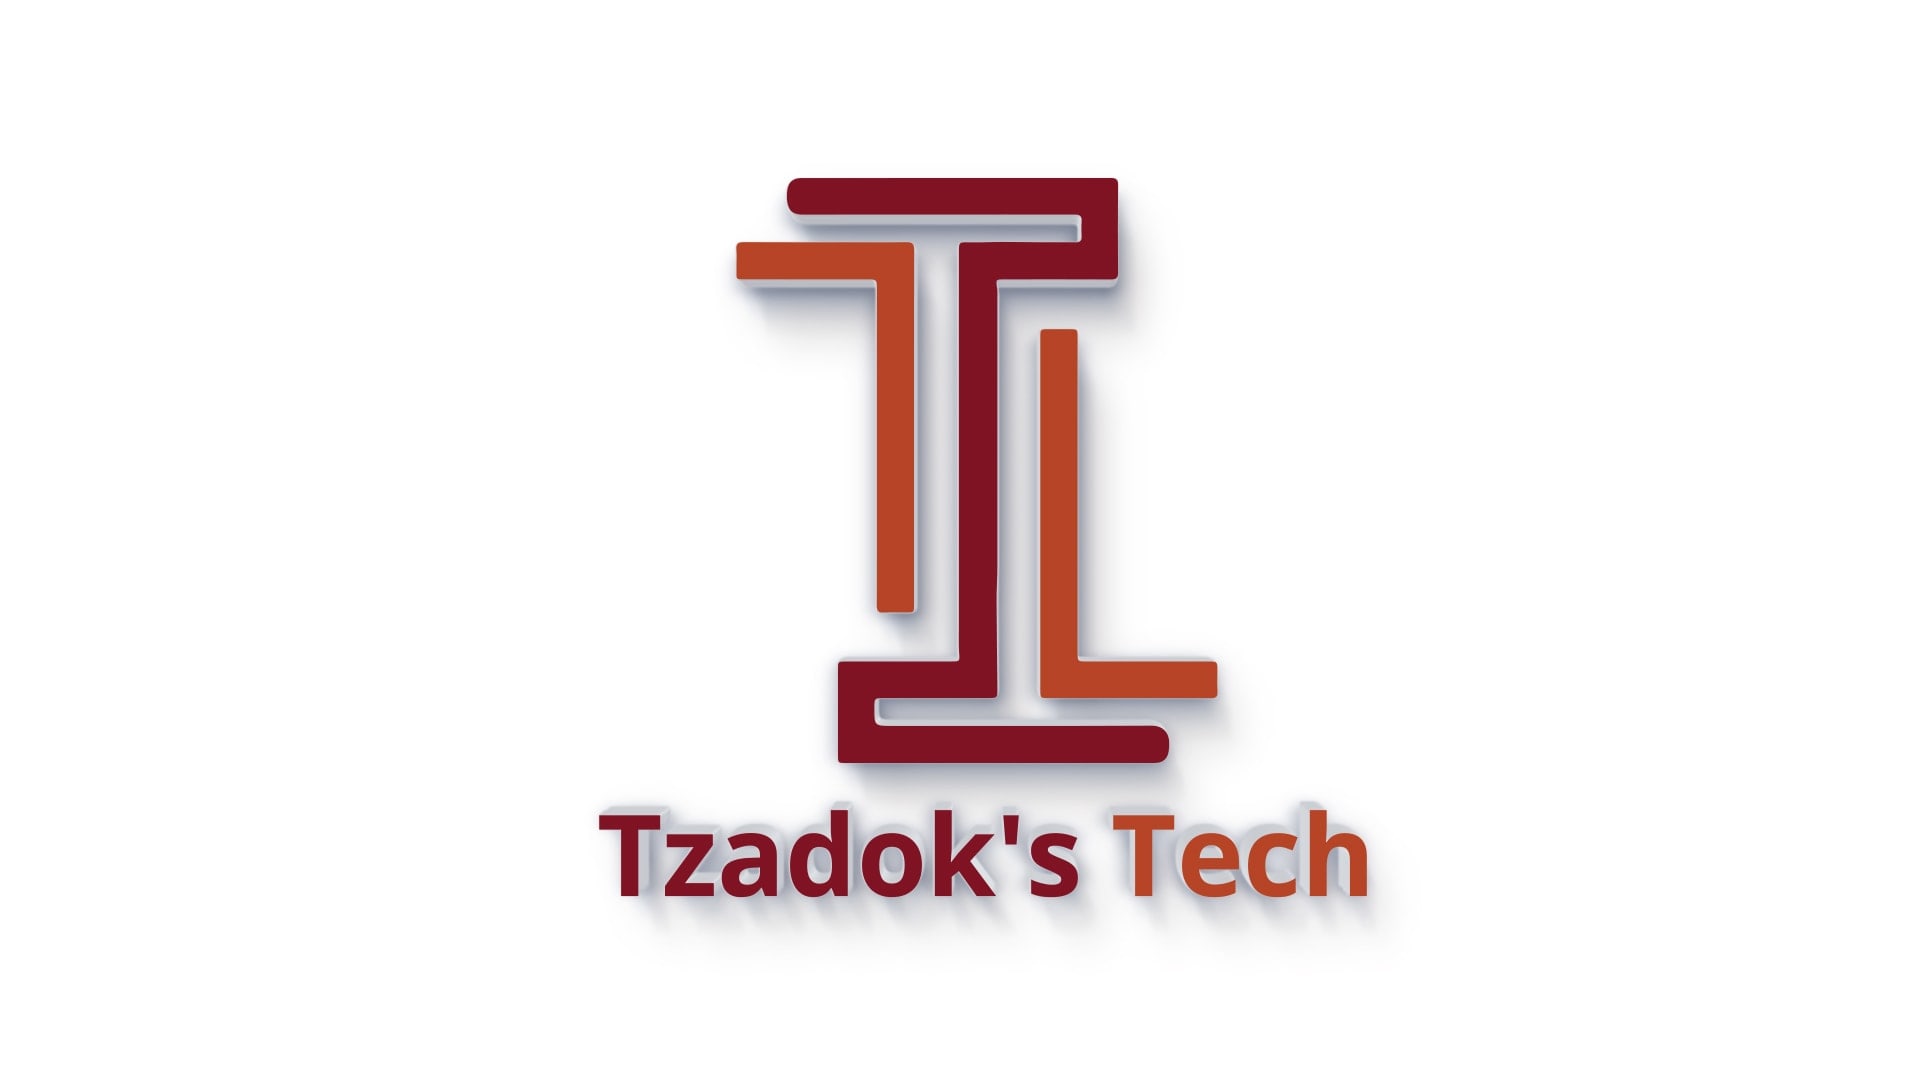 Tzadok's Tech Inc